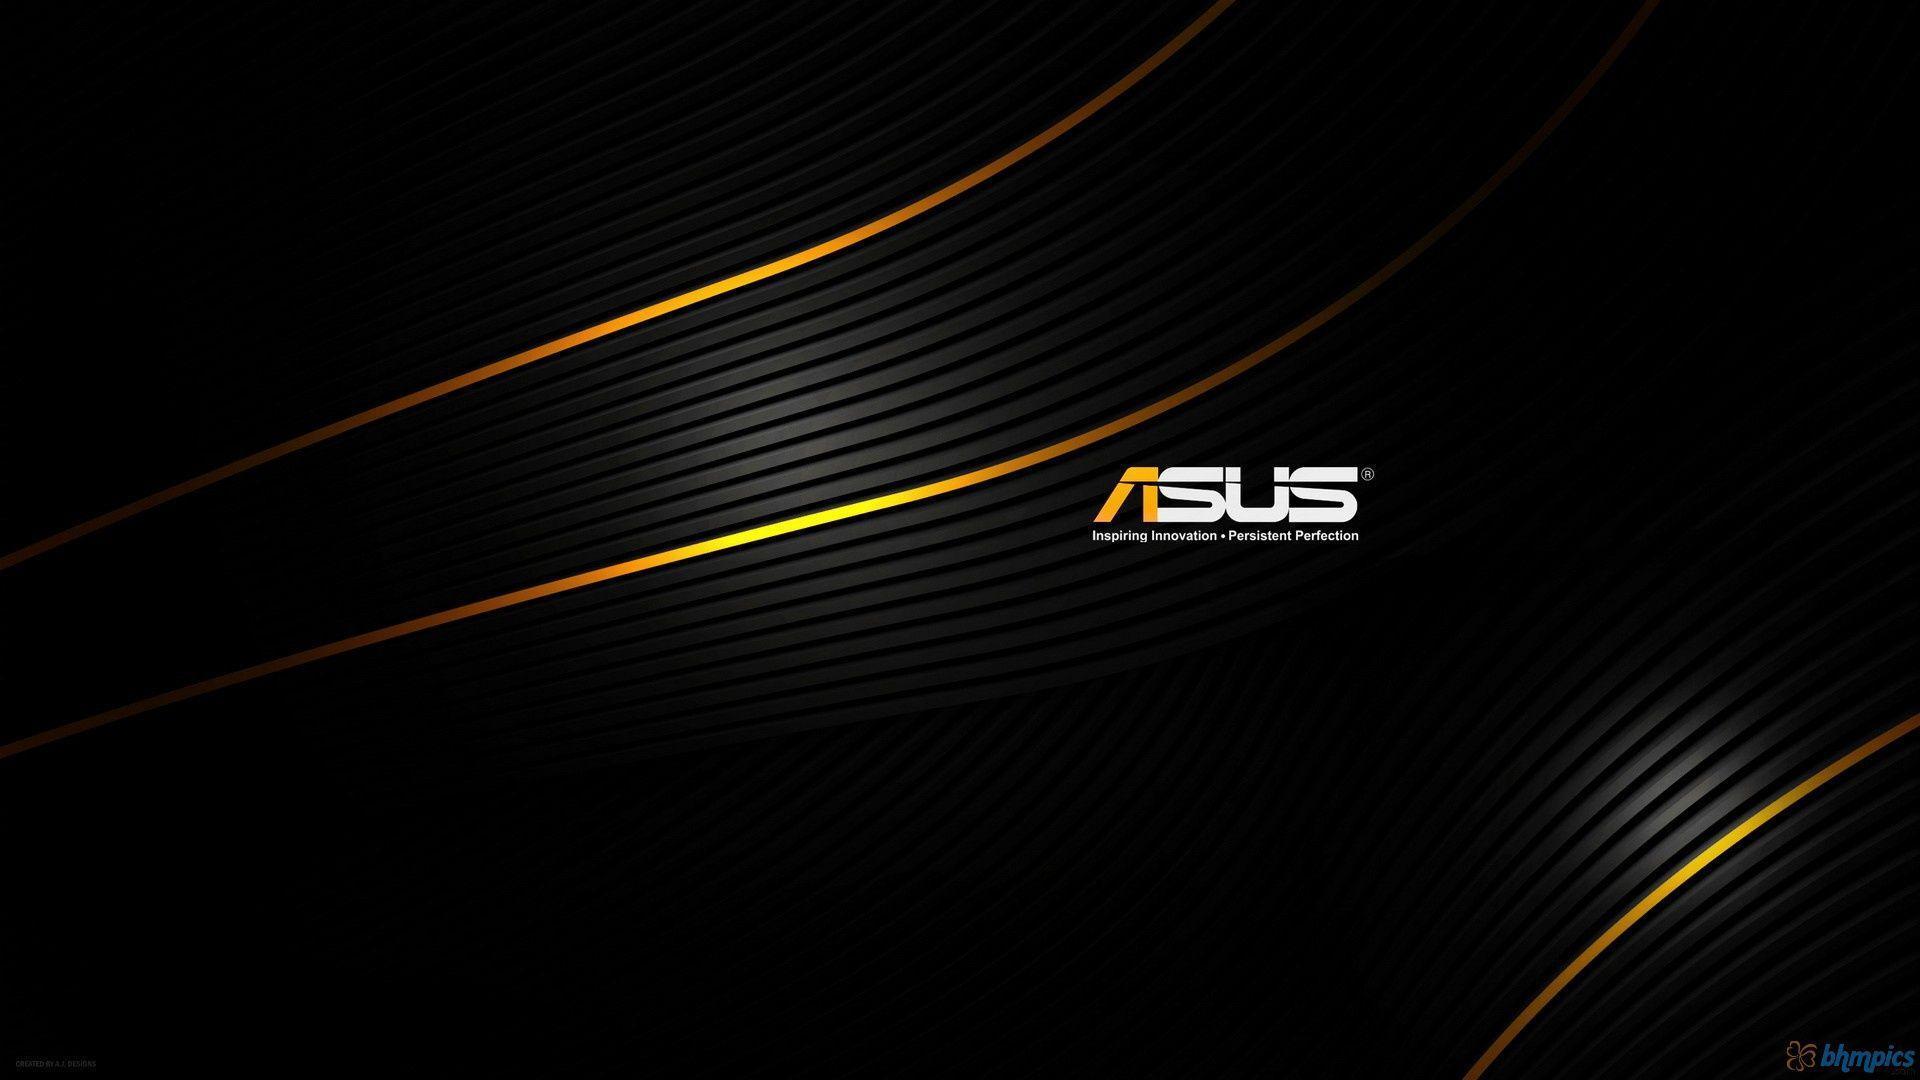 Asus Desktop Background 1920x1080px